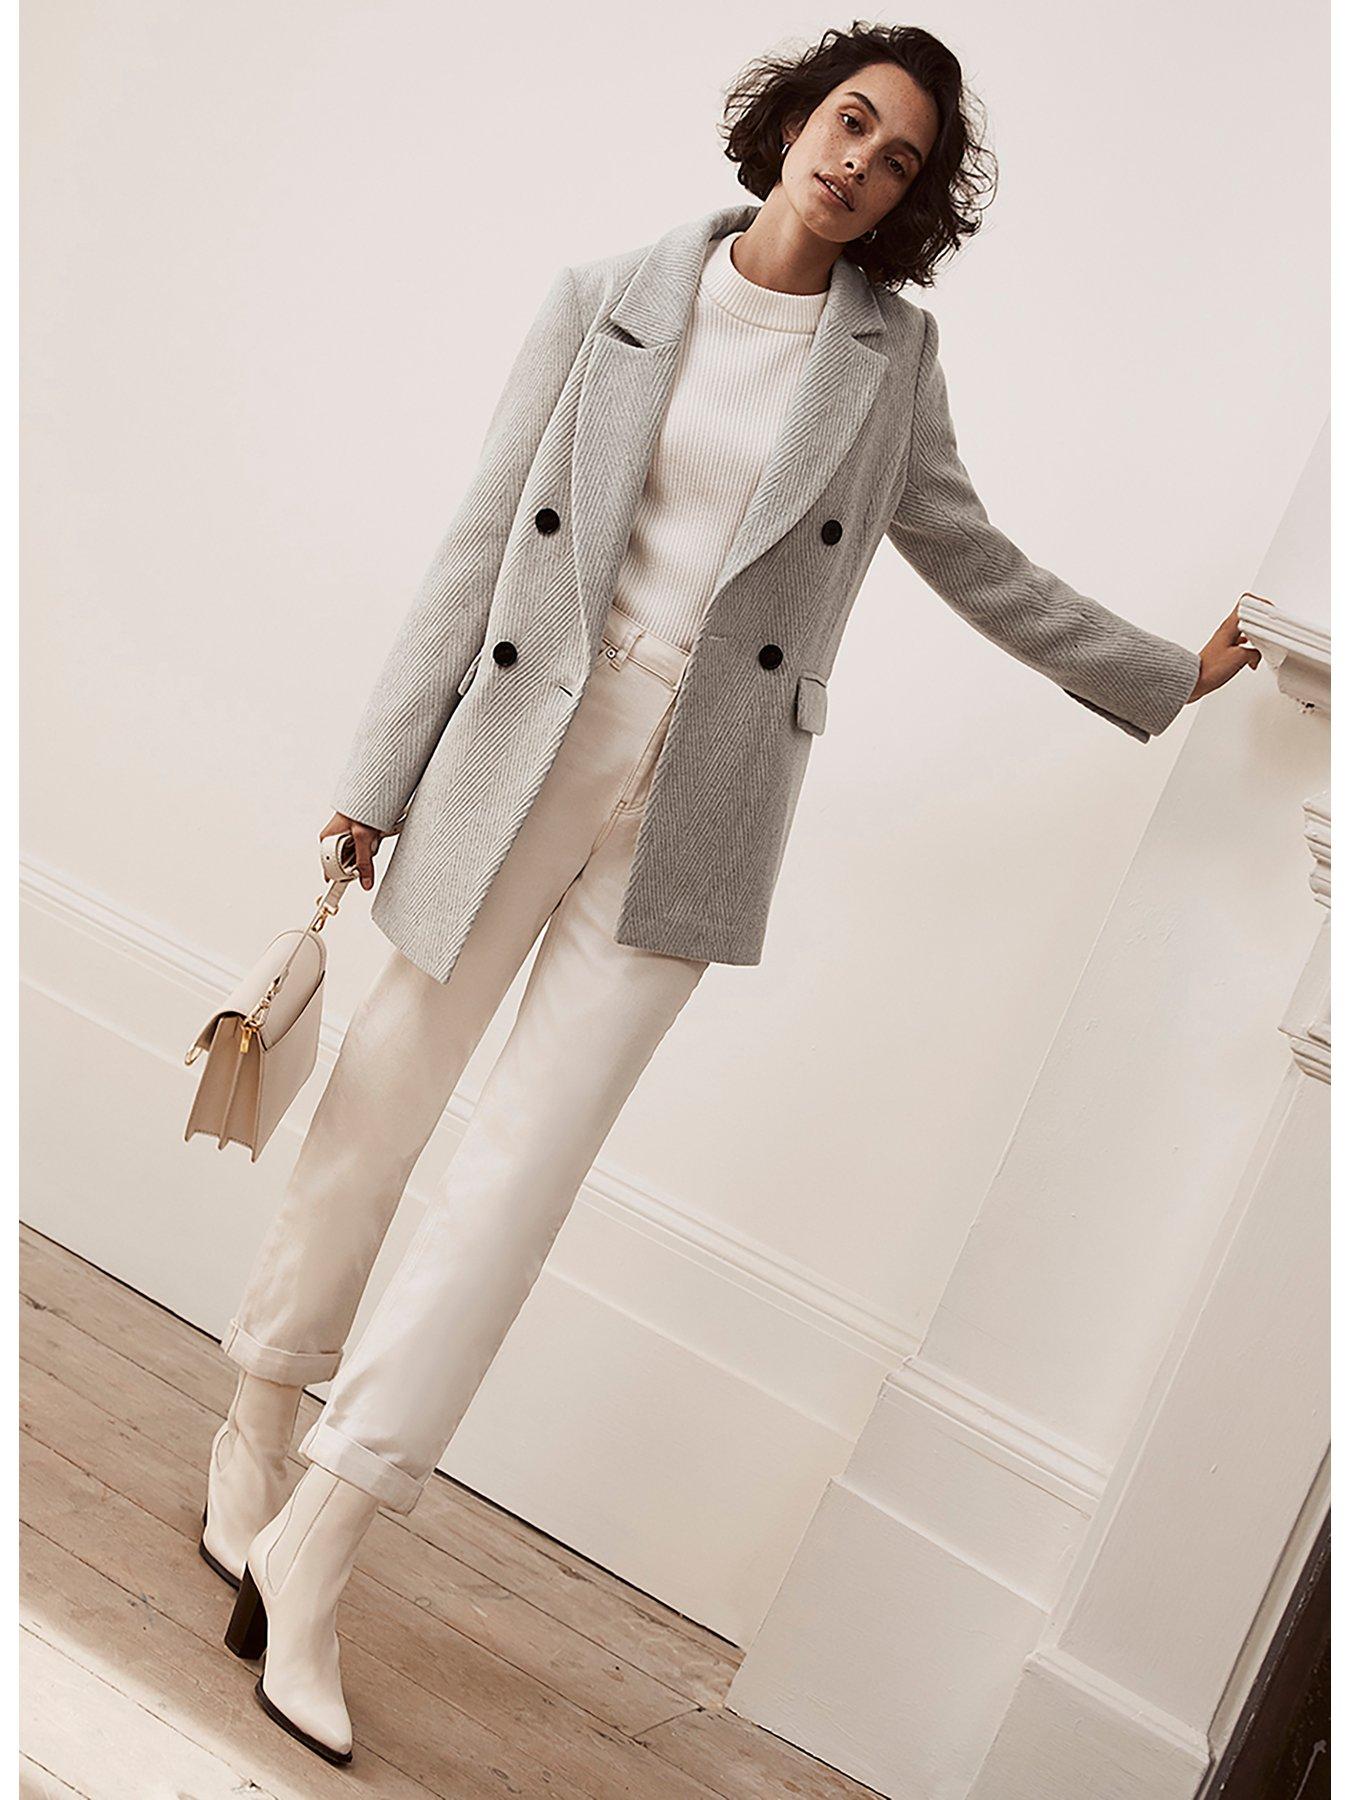 Mint Velvet Textured Wool Blend Long Coat, Grey, XS